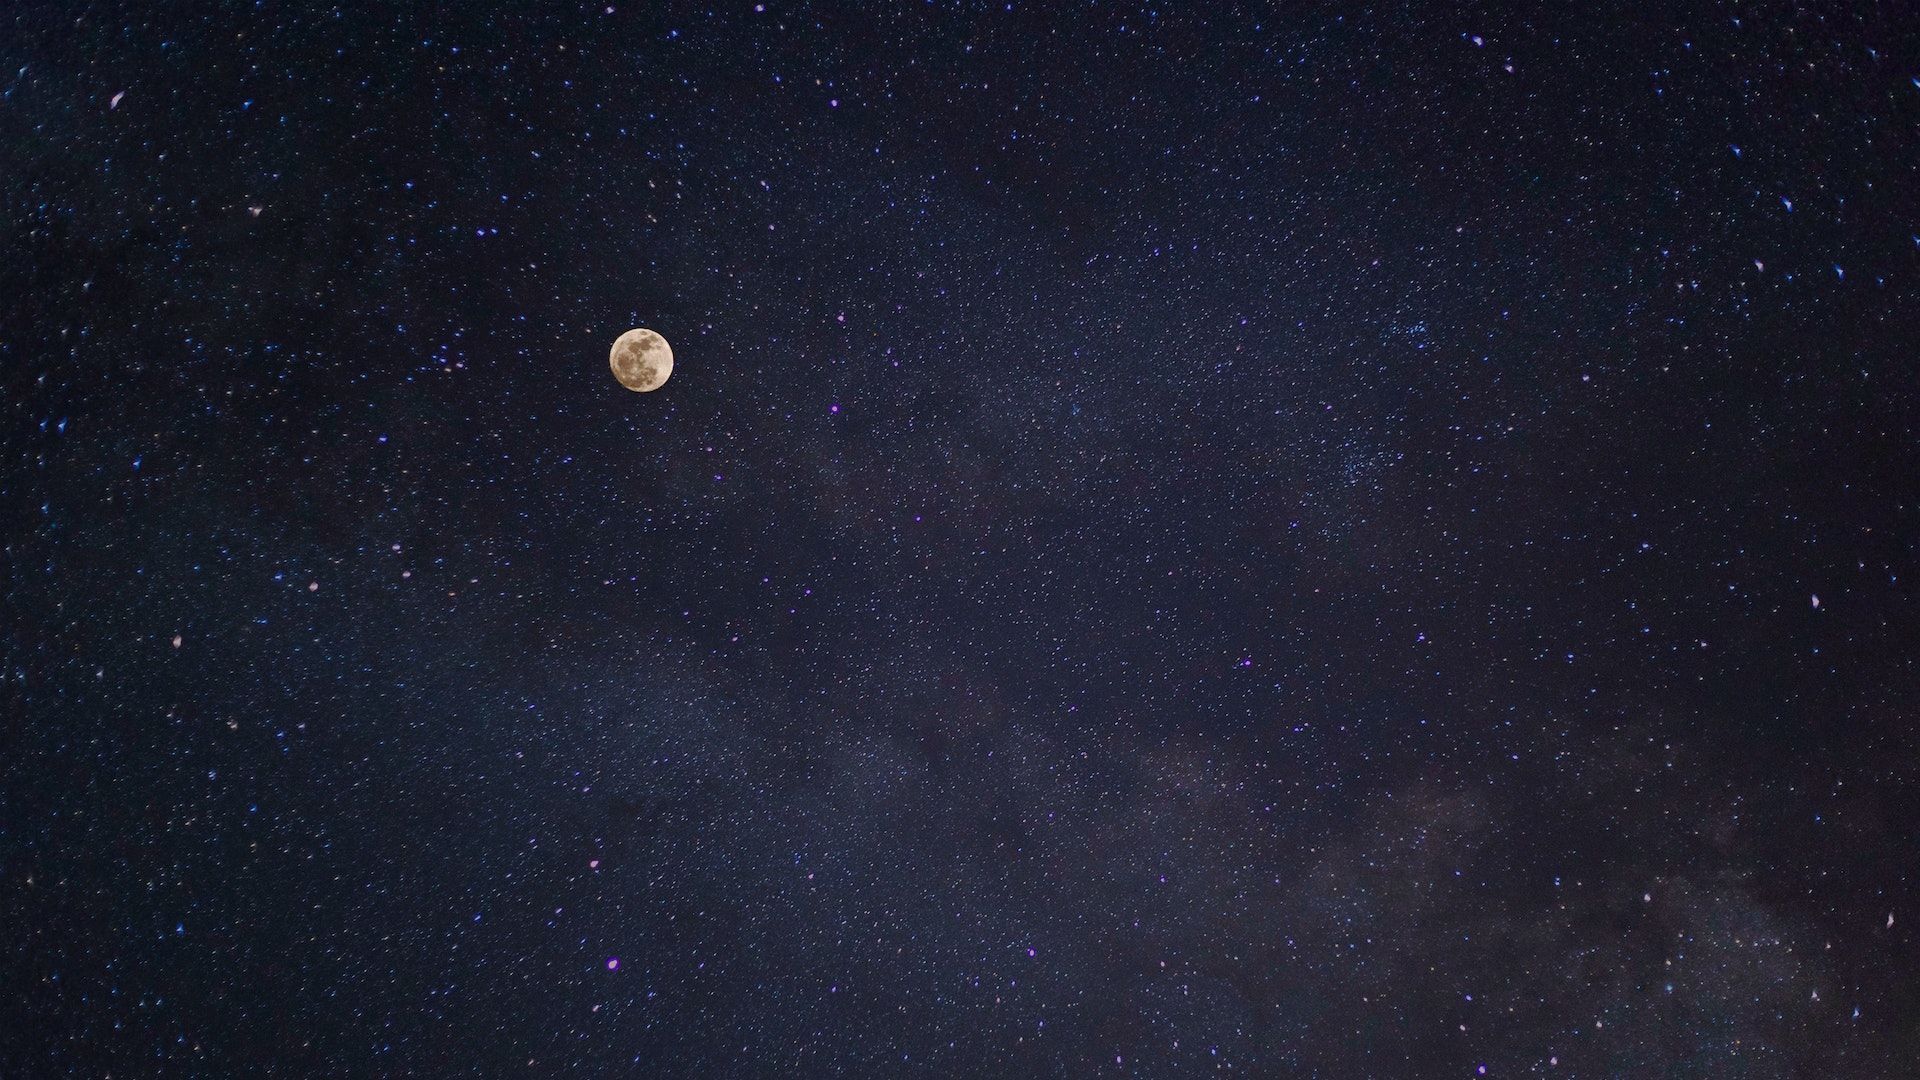 3 травня ясна ніч, багато зірок на небі — чекайте на заморозки / © Pexels